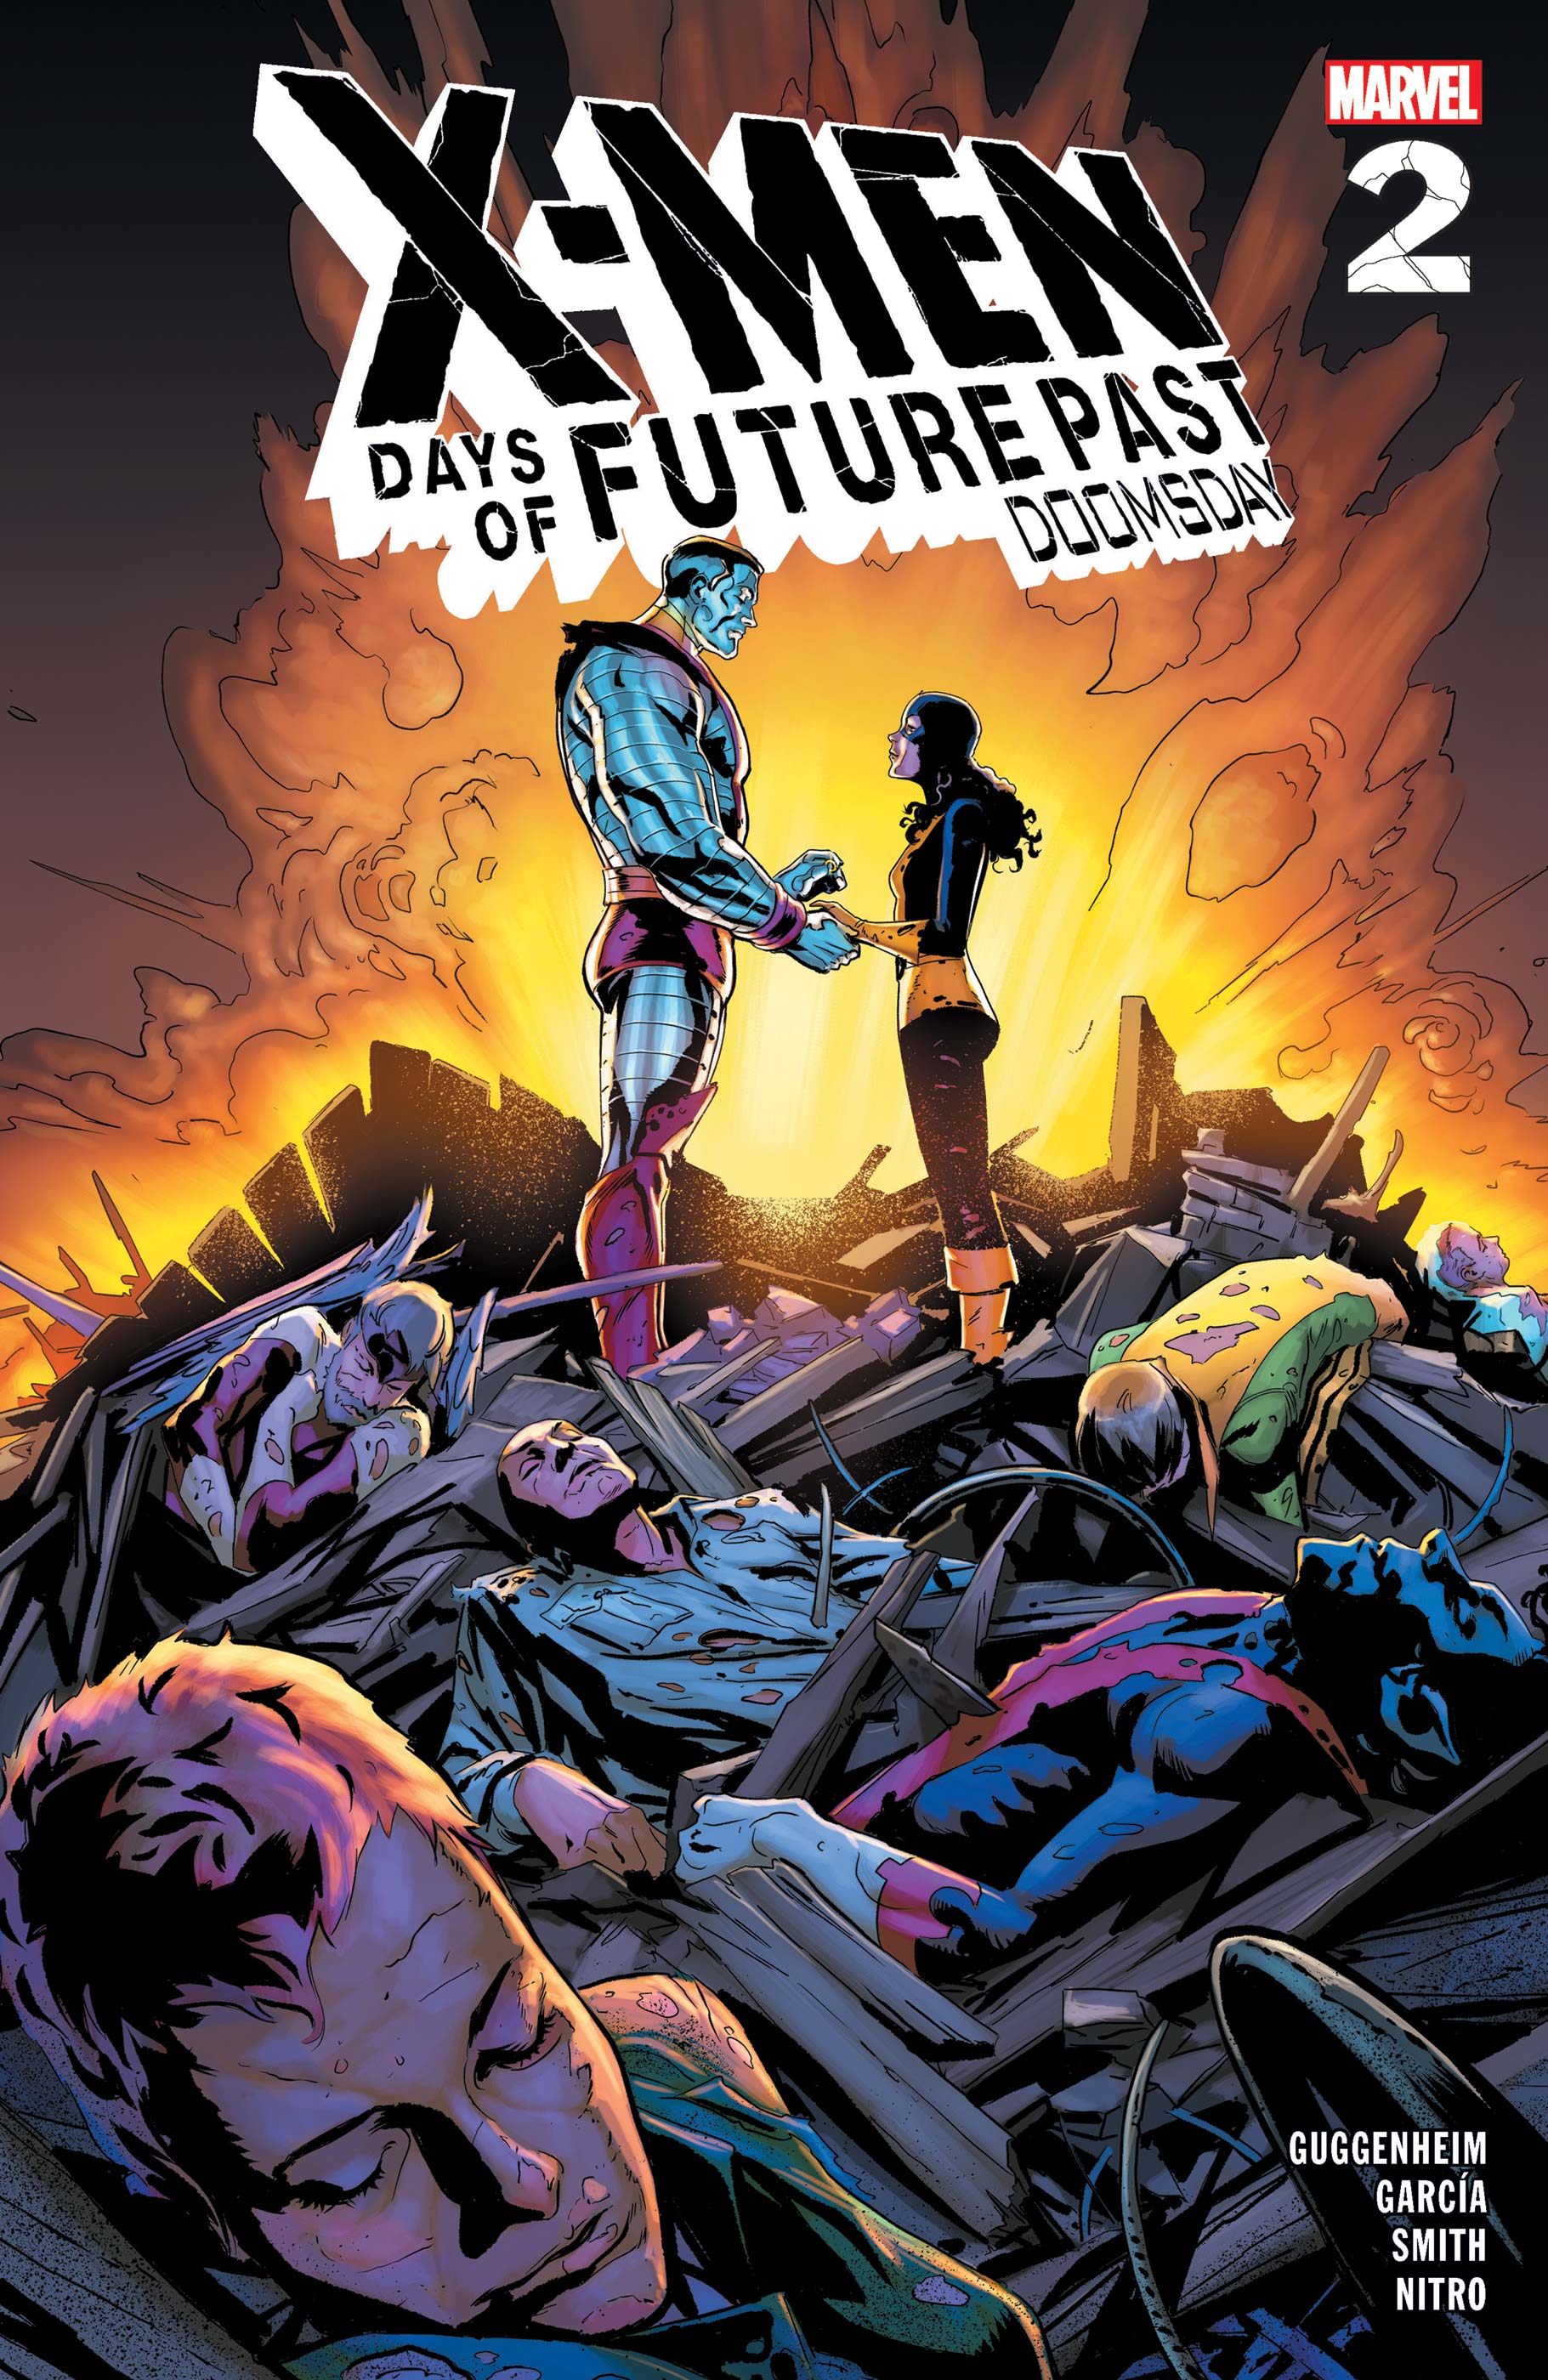 X-Men: Days of Future Past - Doomsday (2023) #2